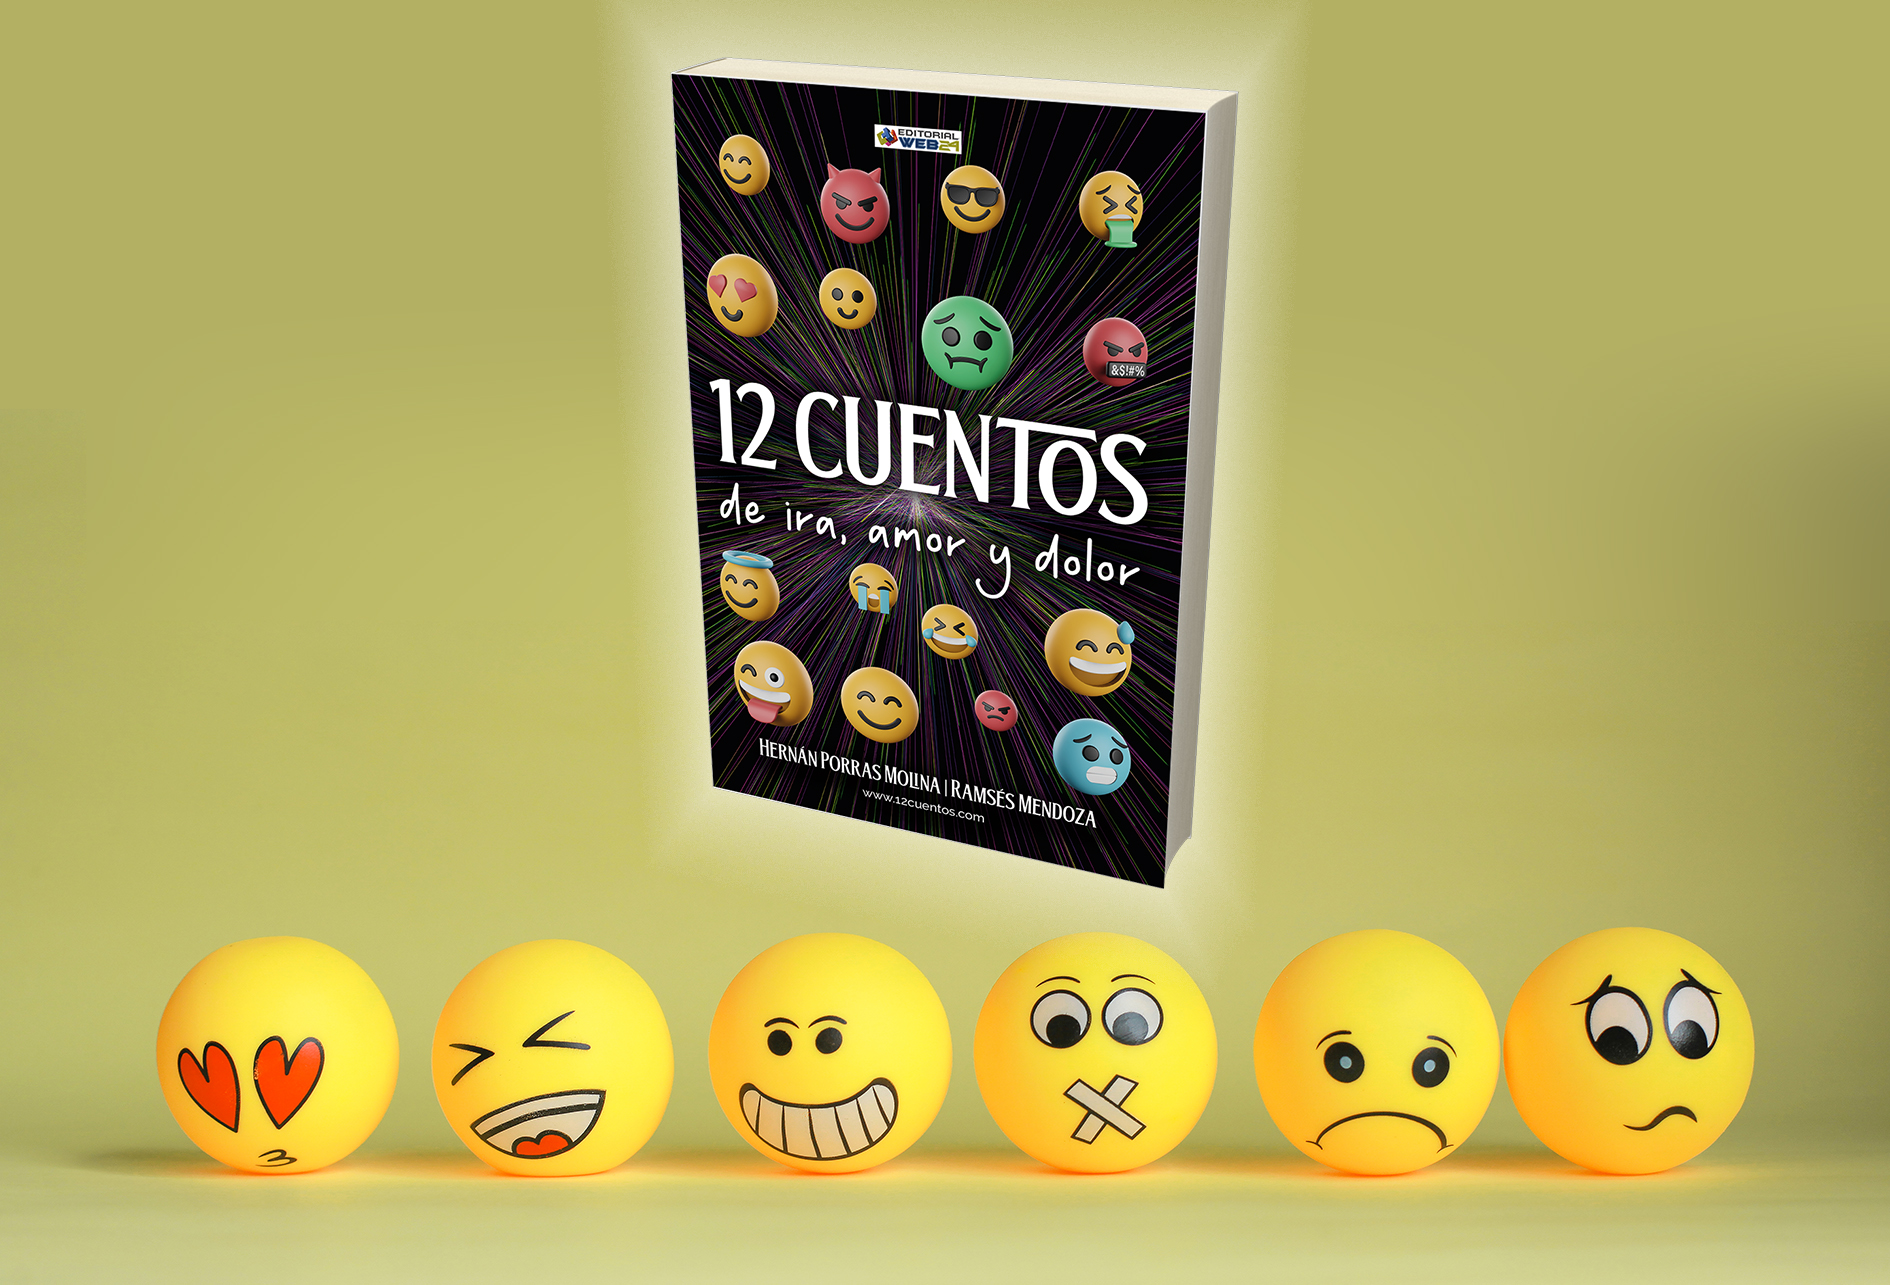 “12 cuentos de ira, amor y dolor”, the new book that excites to taste